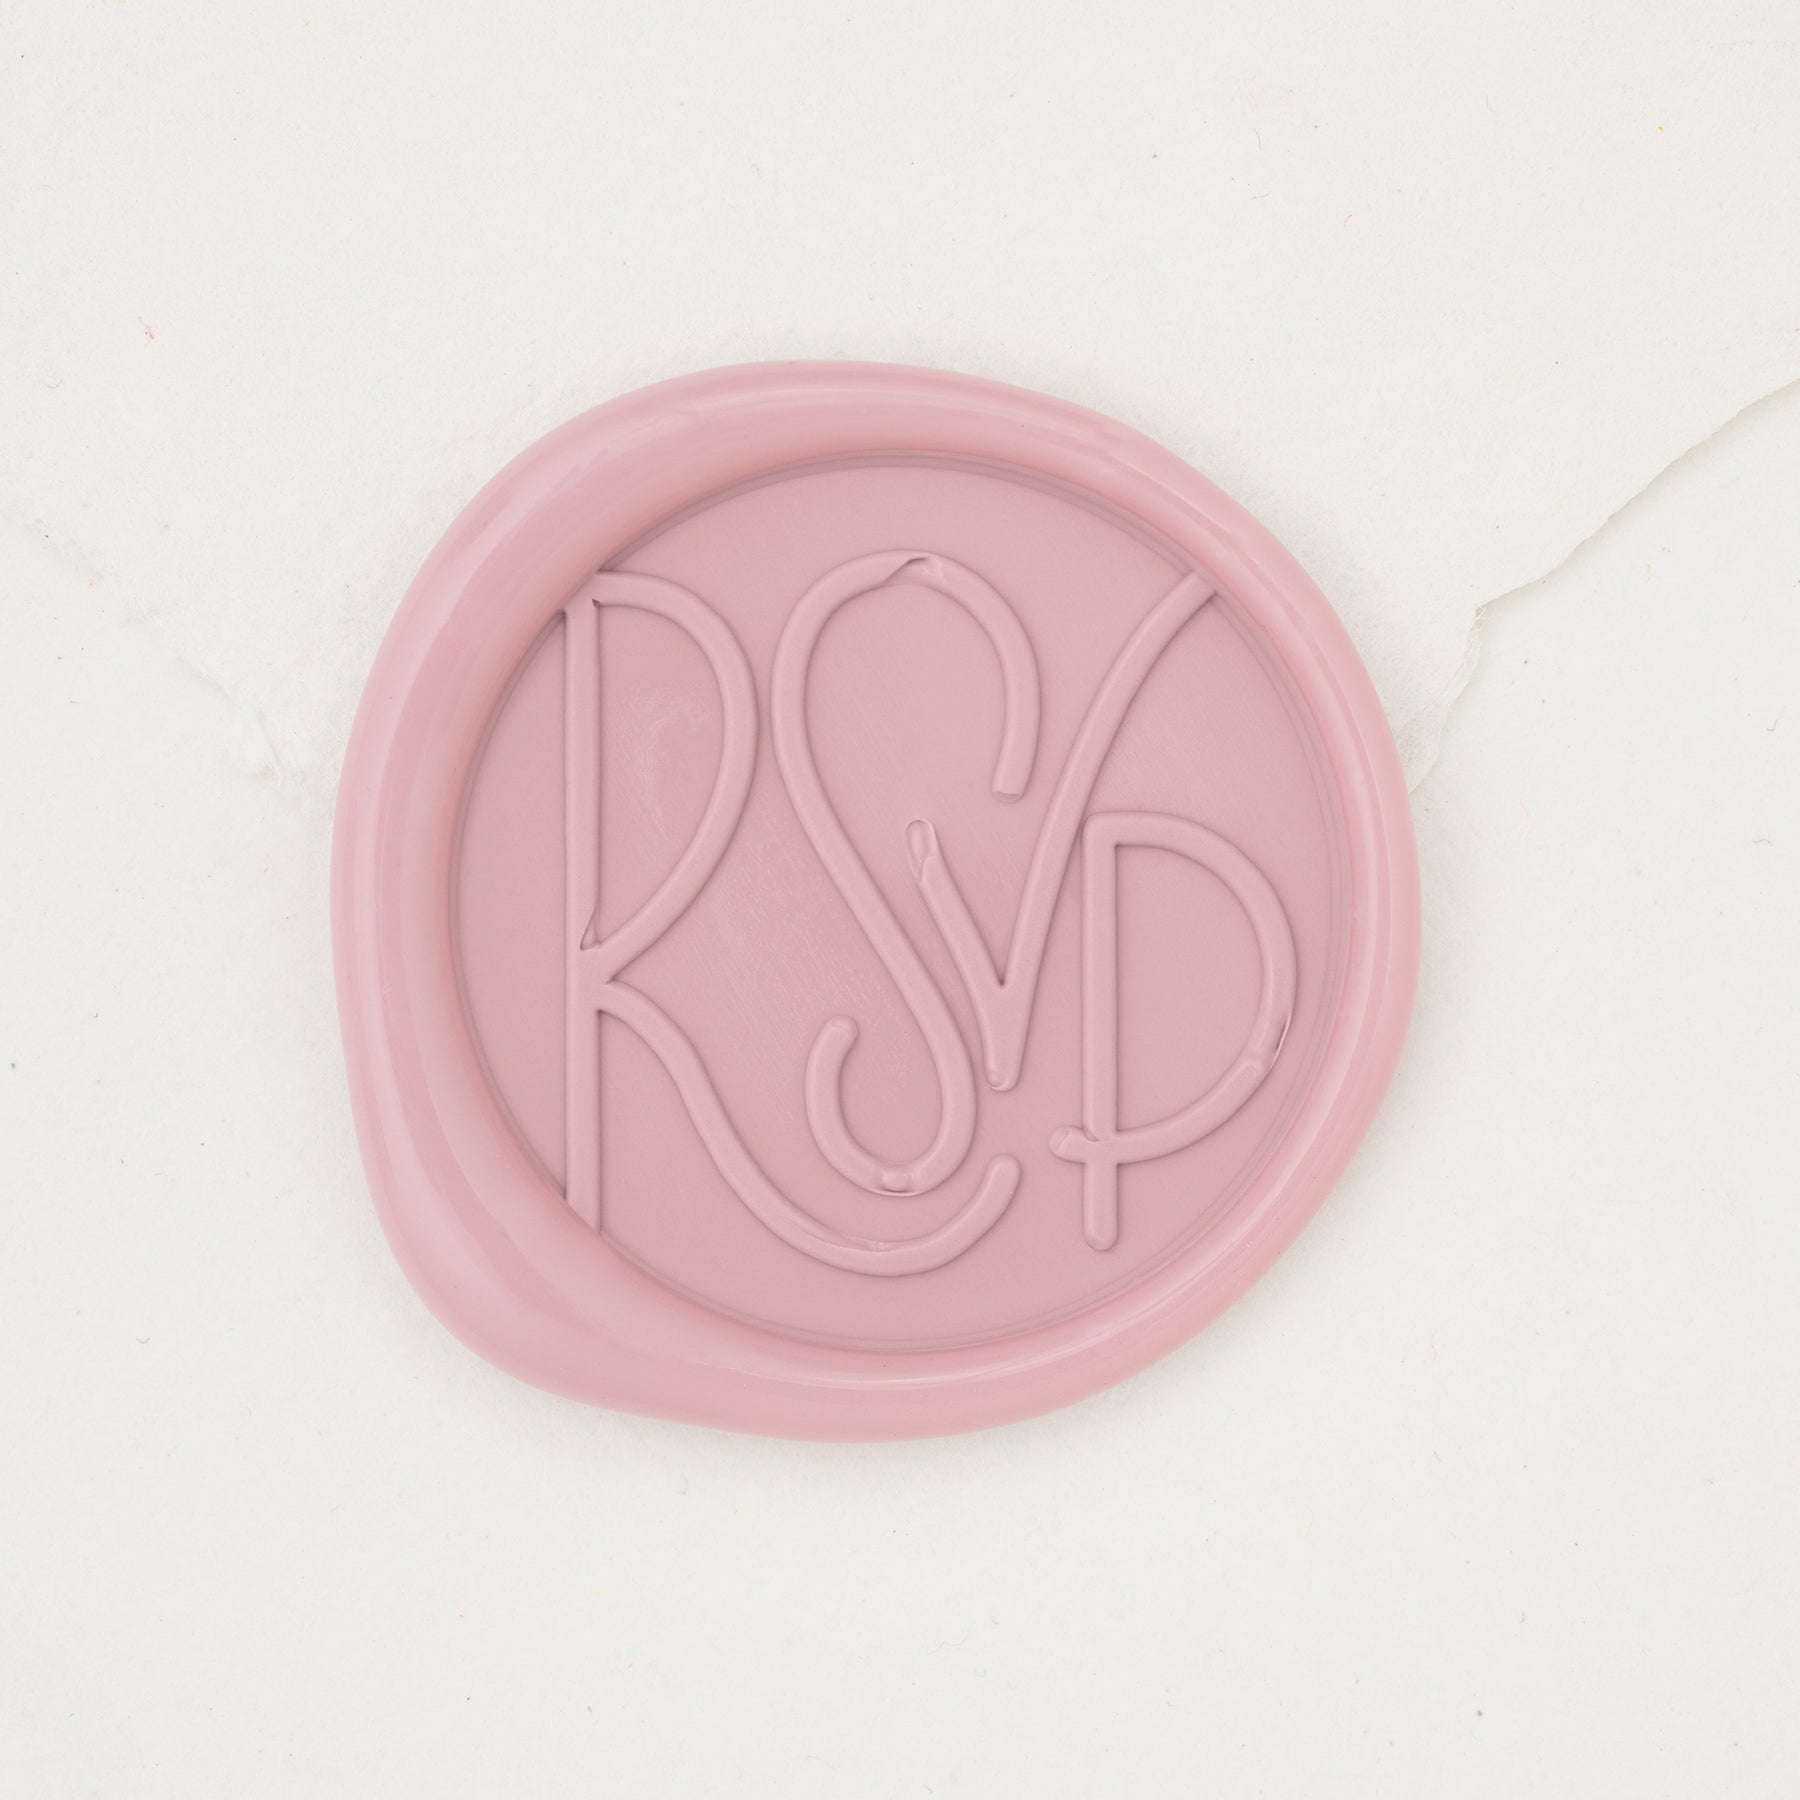 RSVP Wax Seals